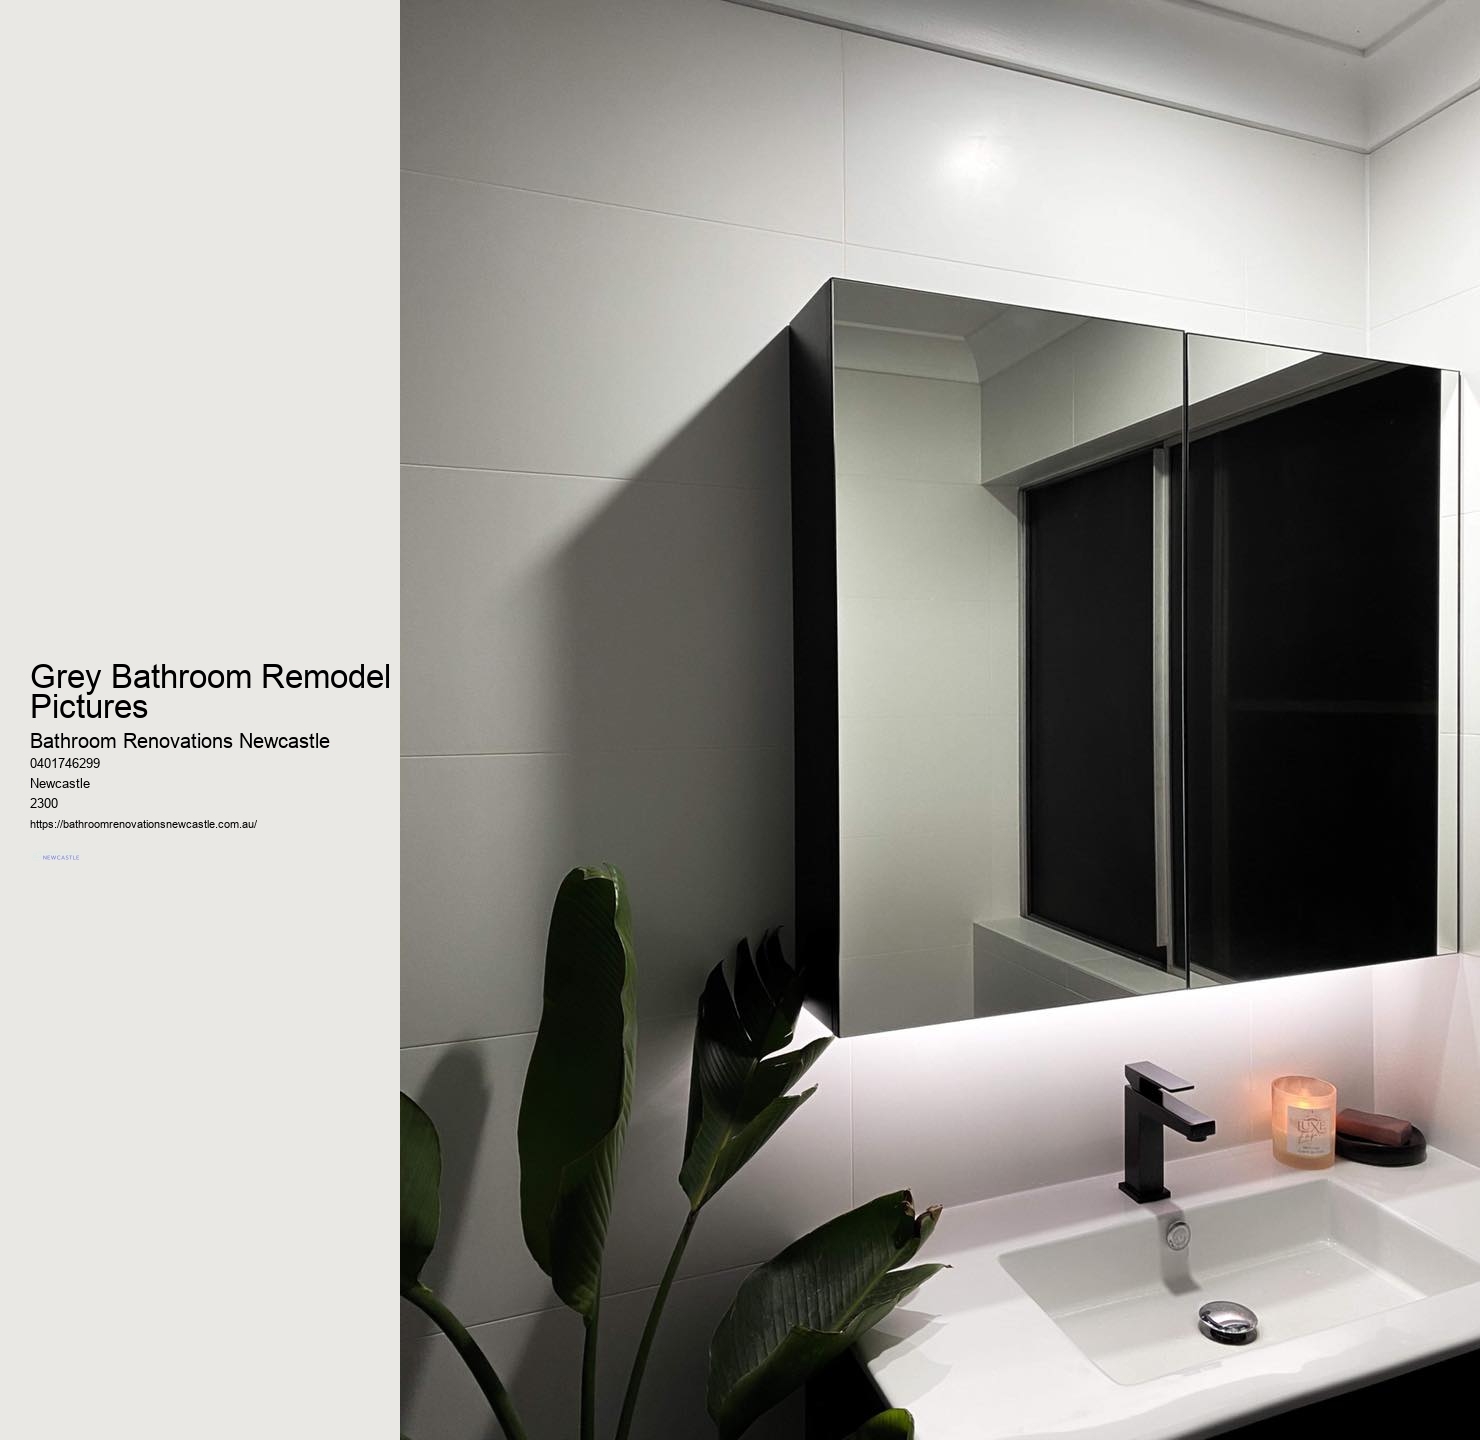 Grey Bathroom Remodel Images